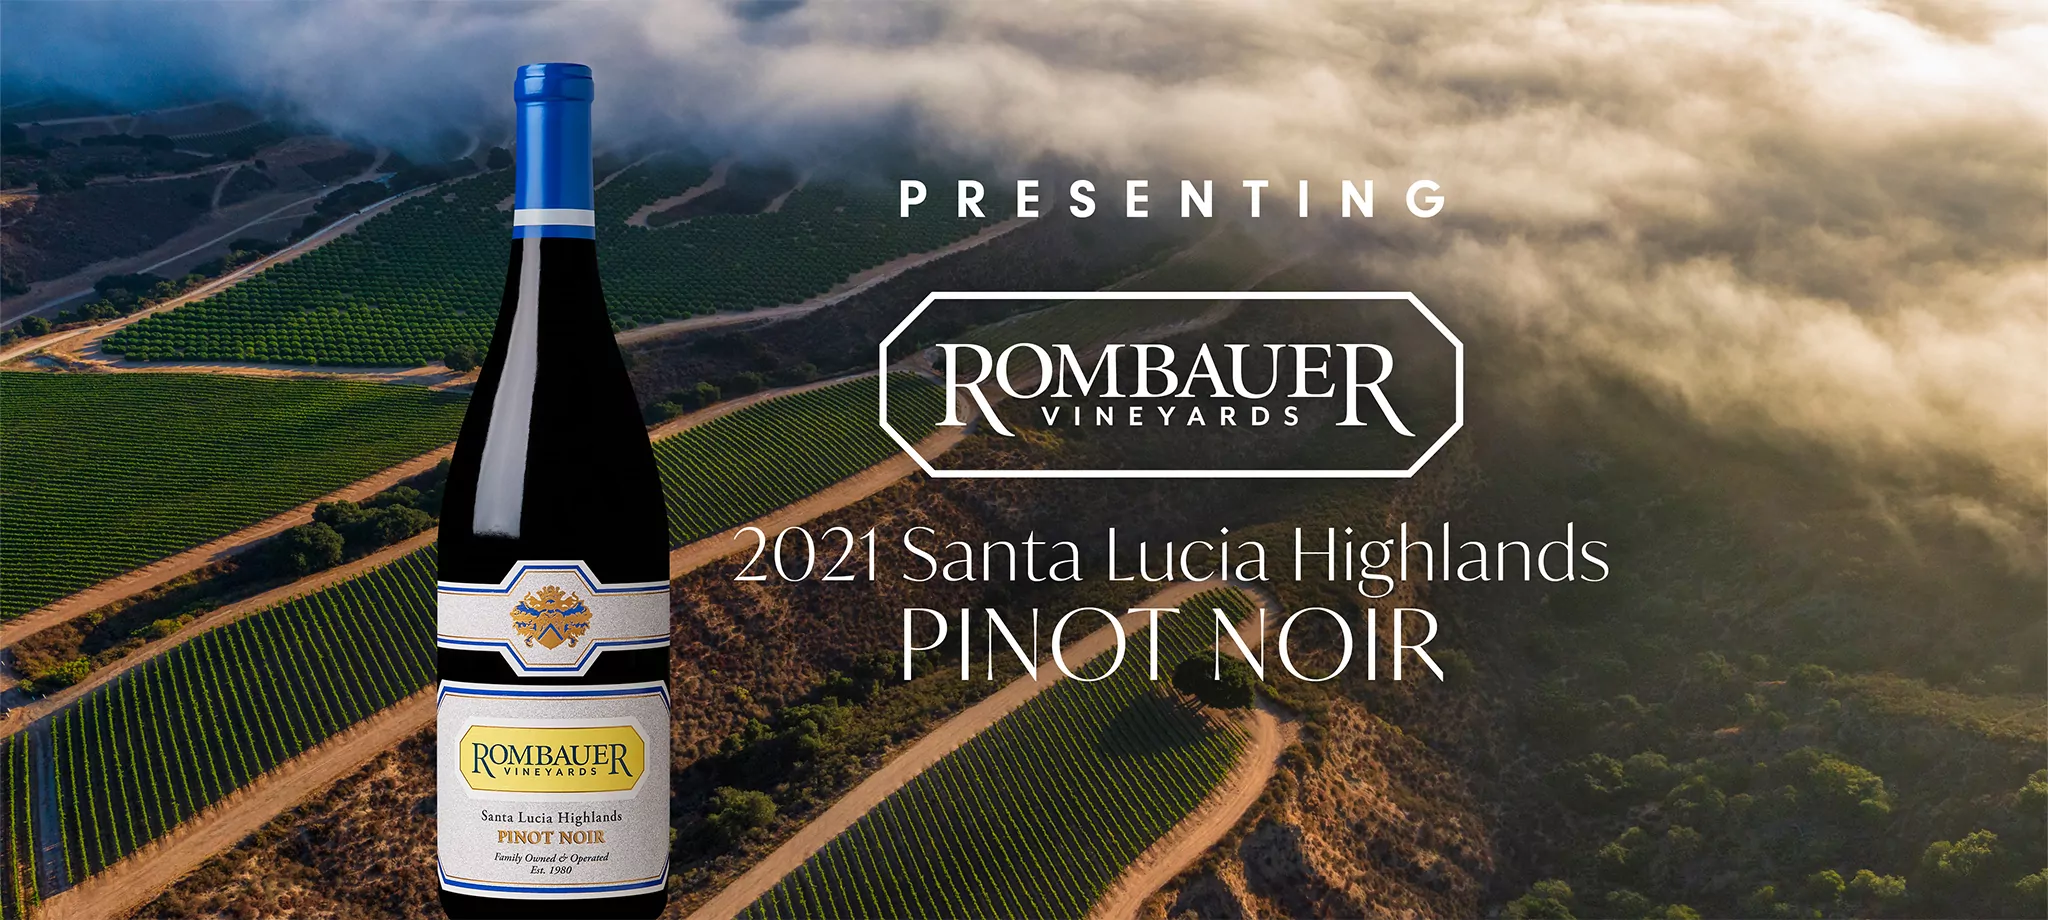 Rombauer Pinot Noir bottle in front of a beautiful Santa Lucia Highlands vineyard